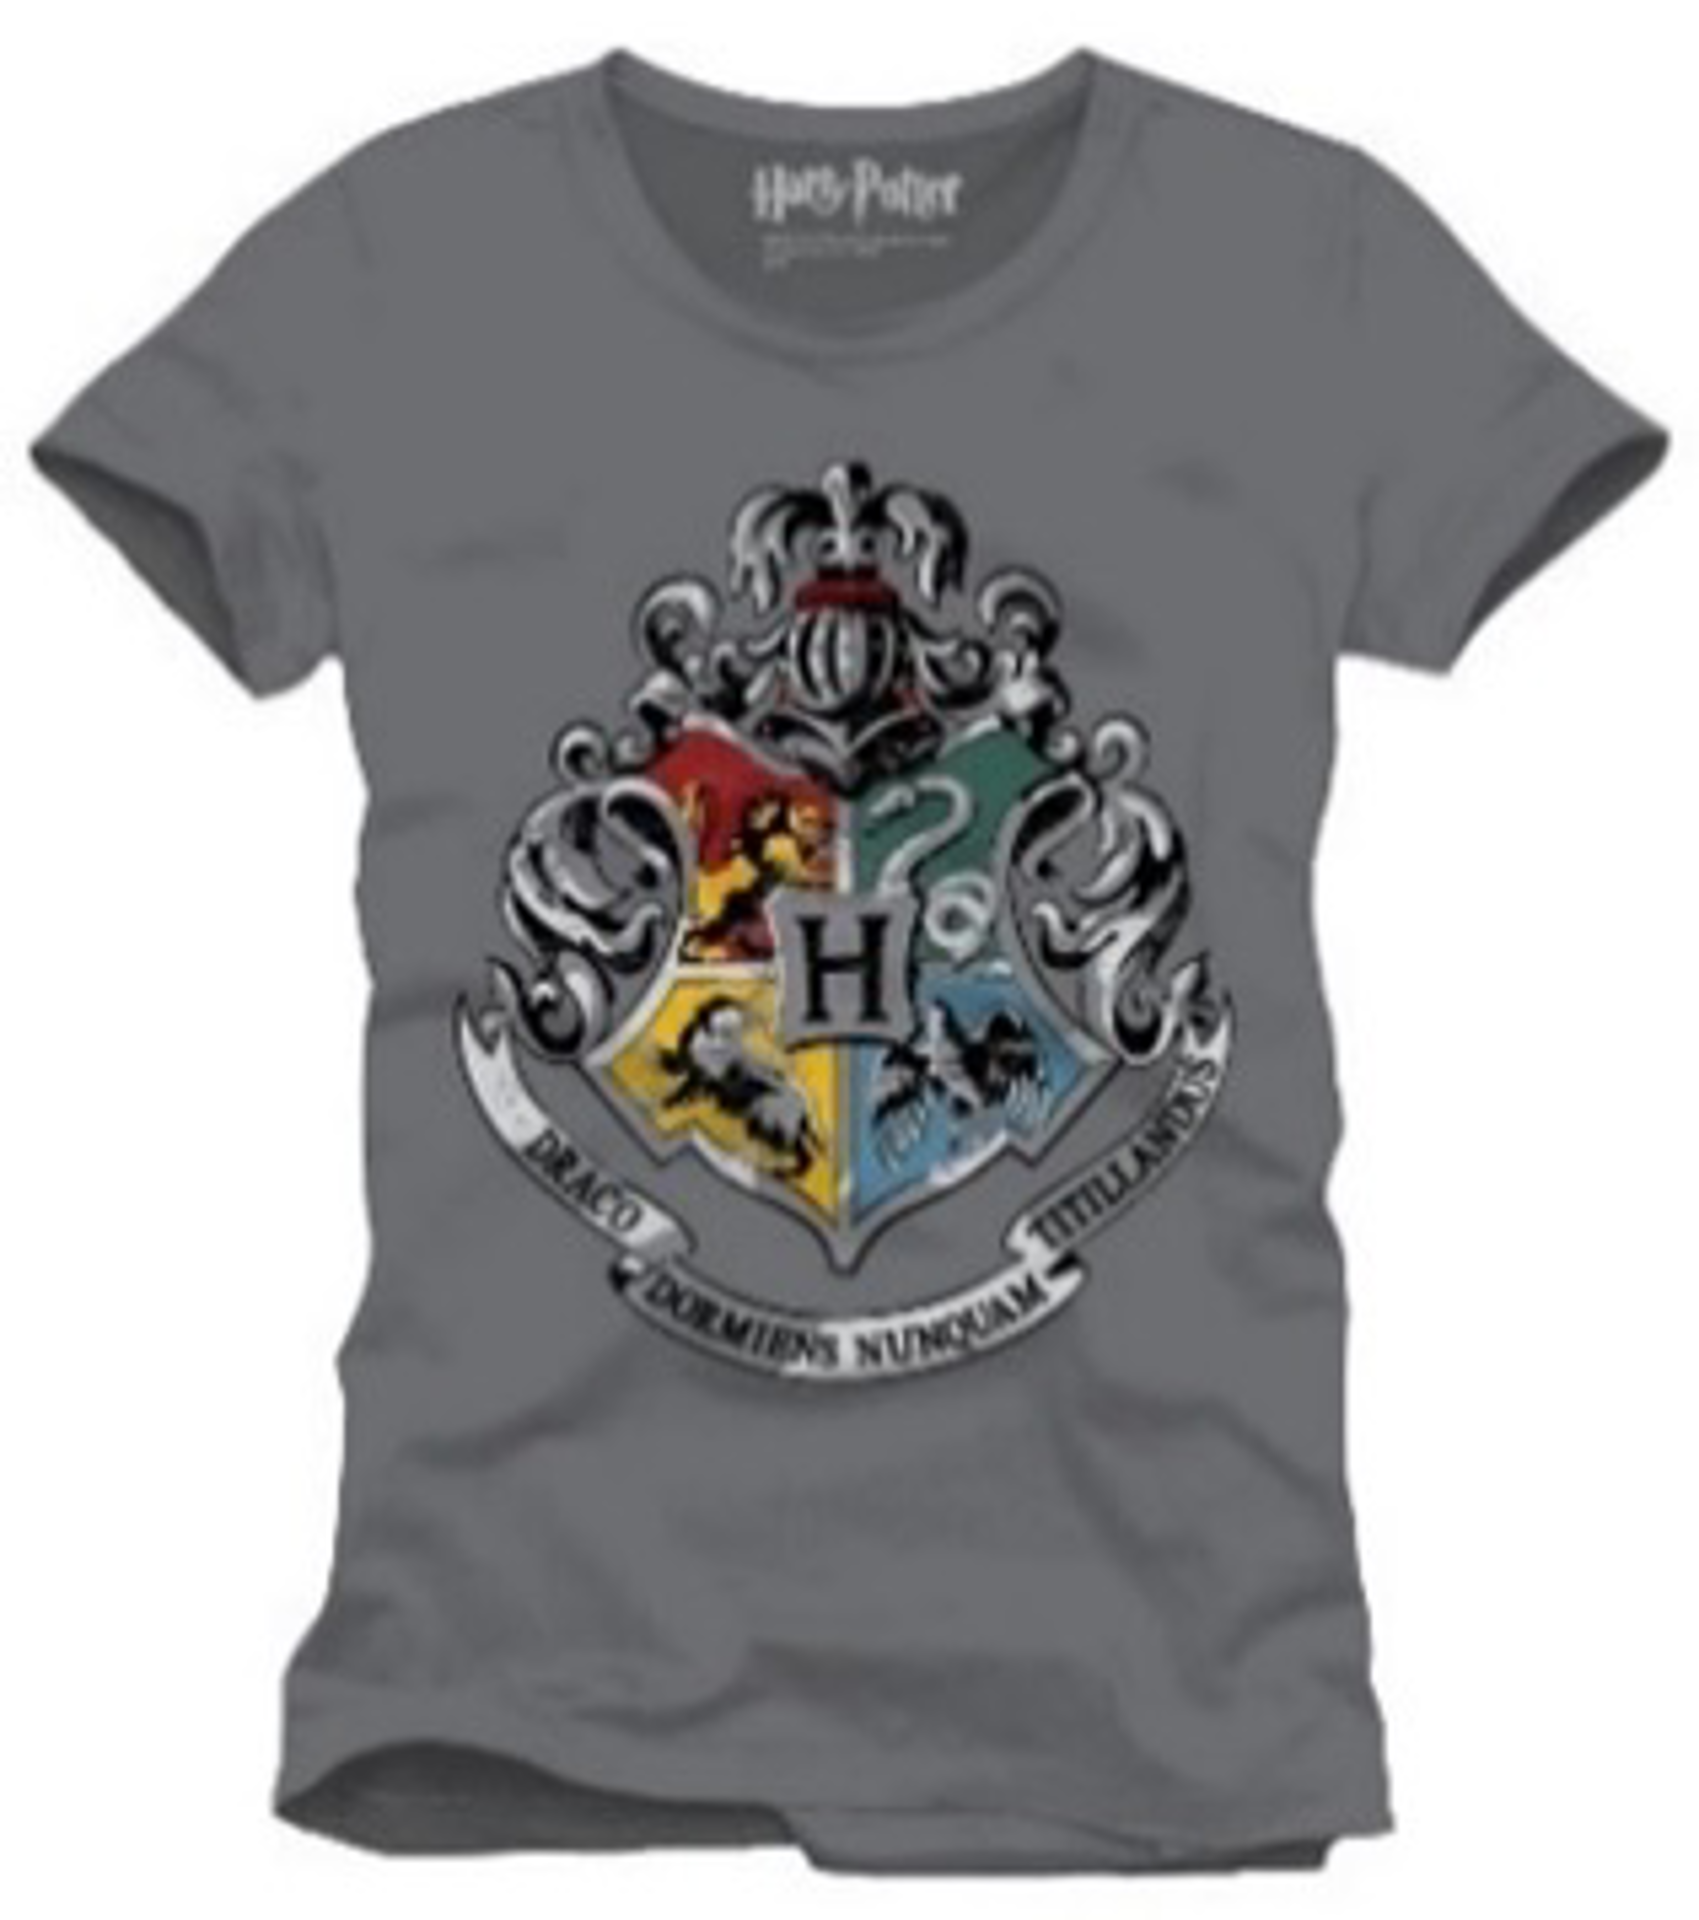 Harry Potter - Hogwarts 4 Houses Crest Anthracite T-Shirt - XL